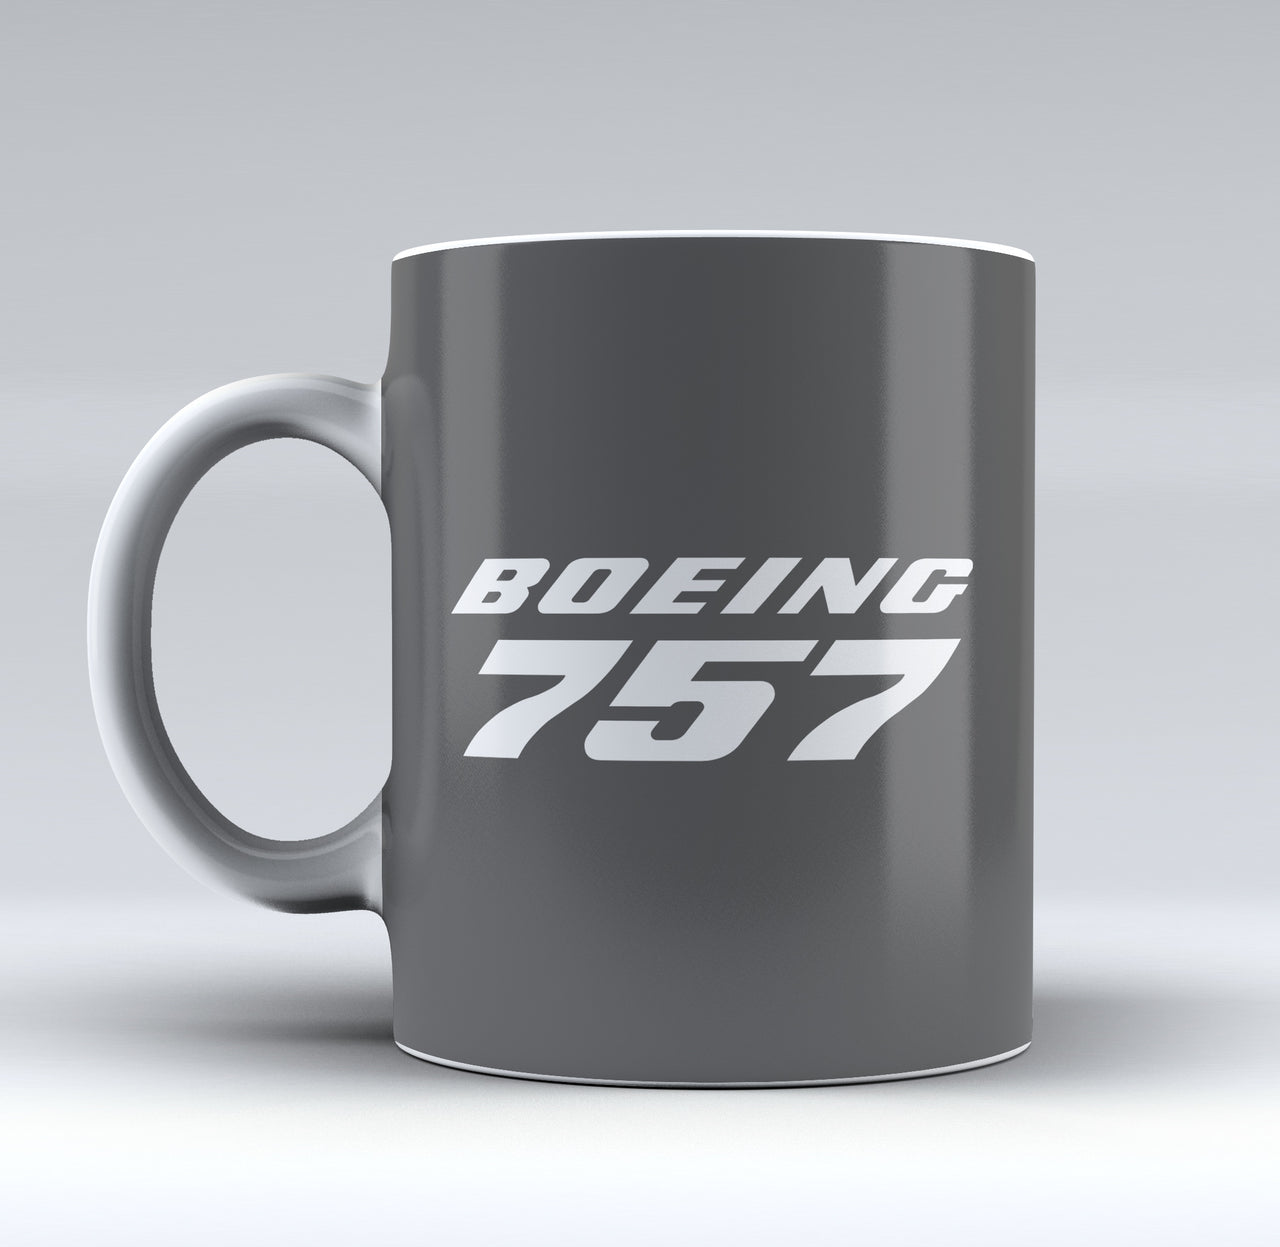 Boeing 757 & Text Designed Mugs